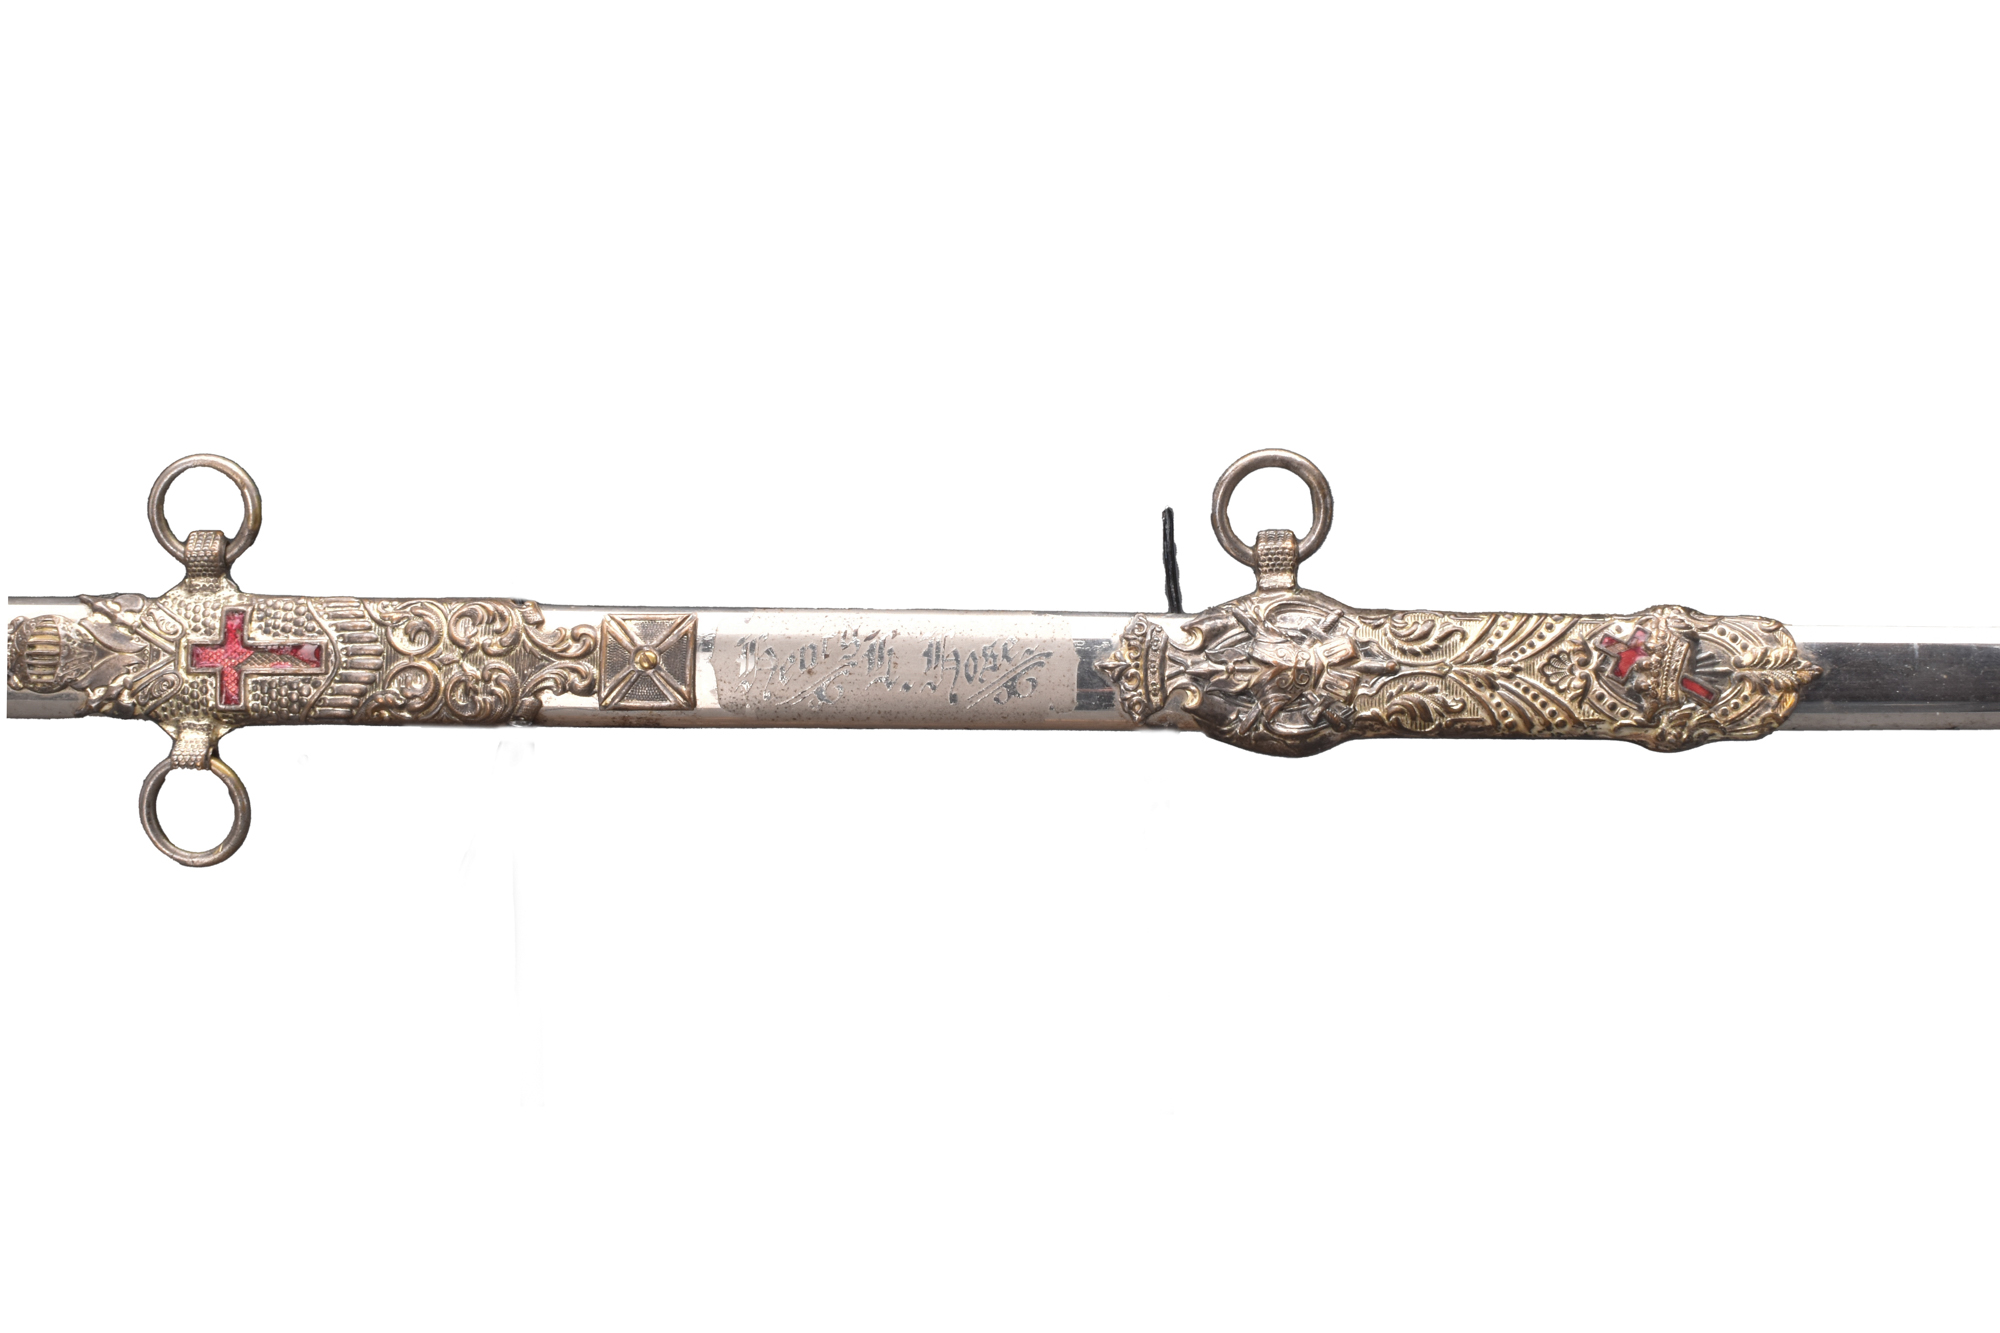 A NIGHTS TEMPLAR MASONIC SWORD, LATE 19TH EARLY 20TH C. - Image 9 of 13